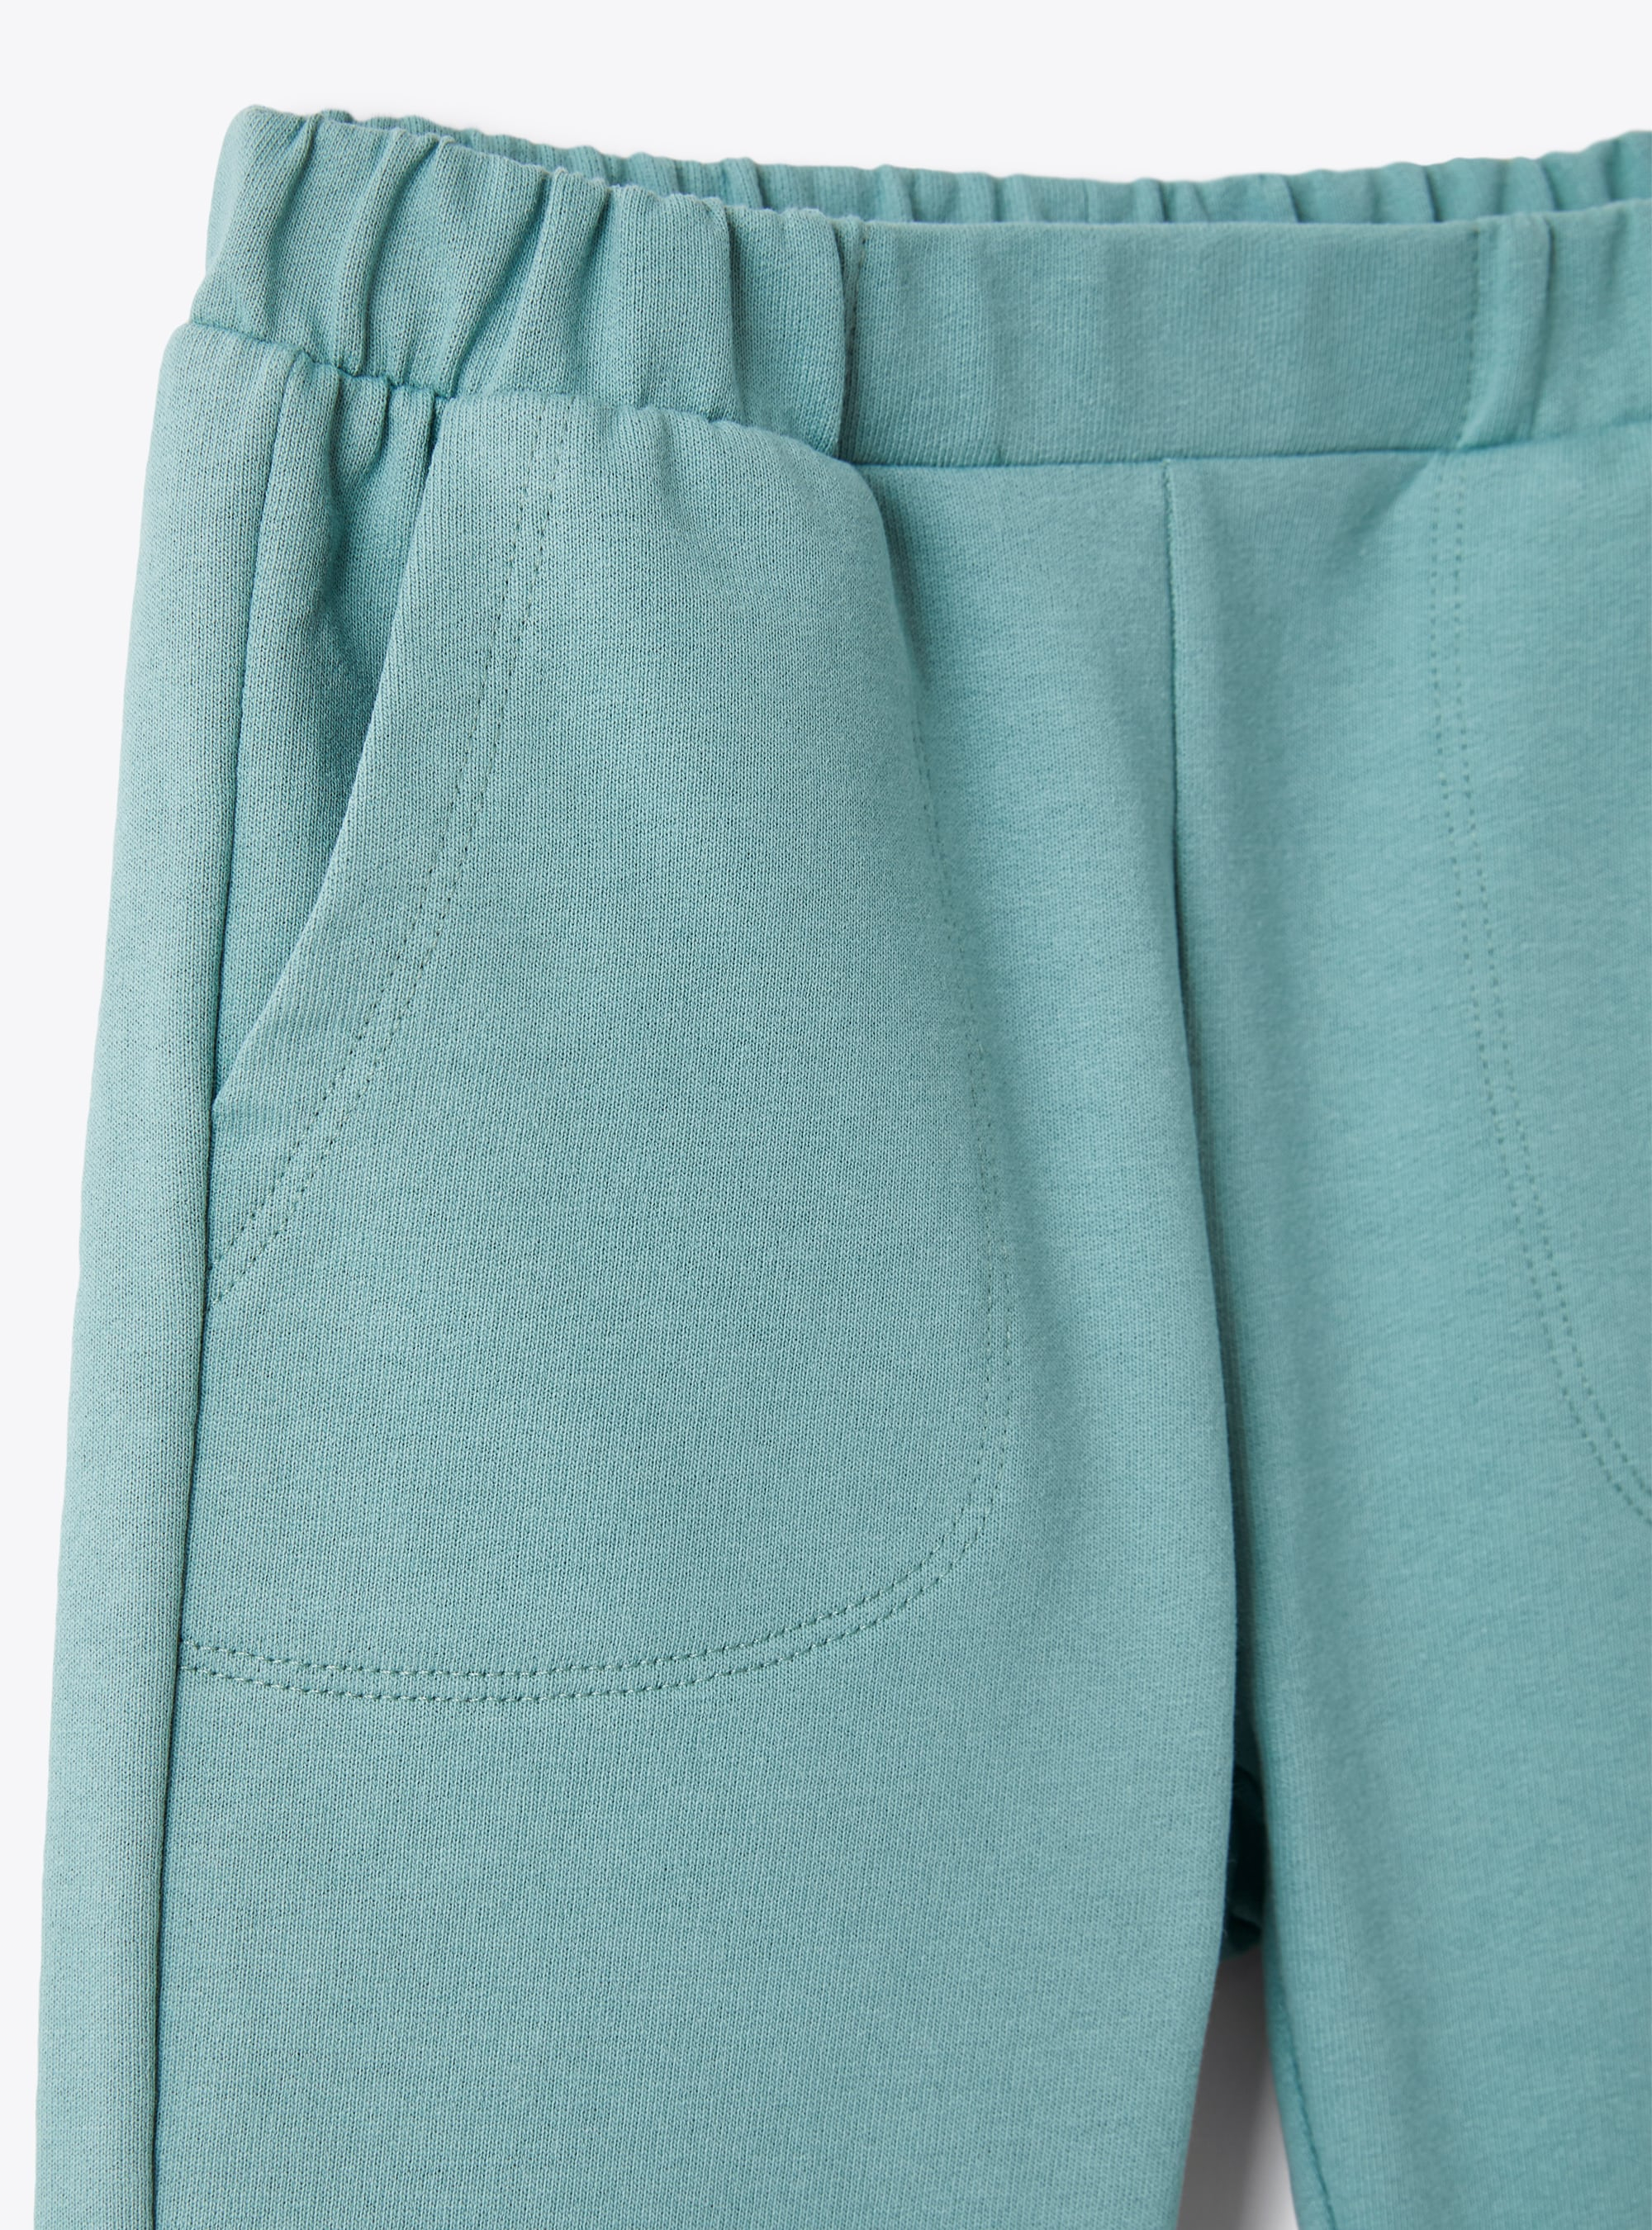 Hose aus grünem Baumwoll-Sweatstoff - Grün | Il Gufo